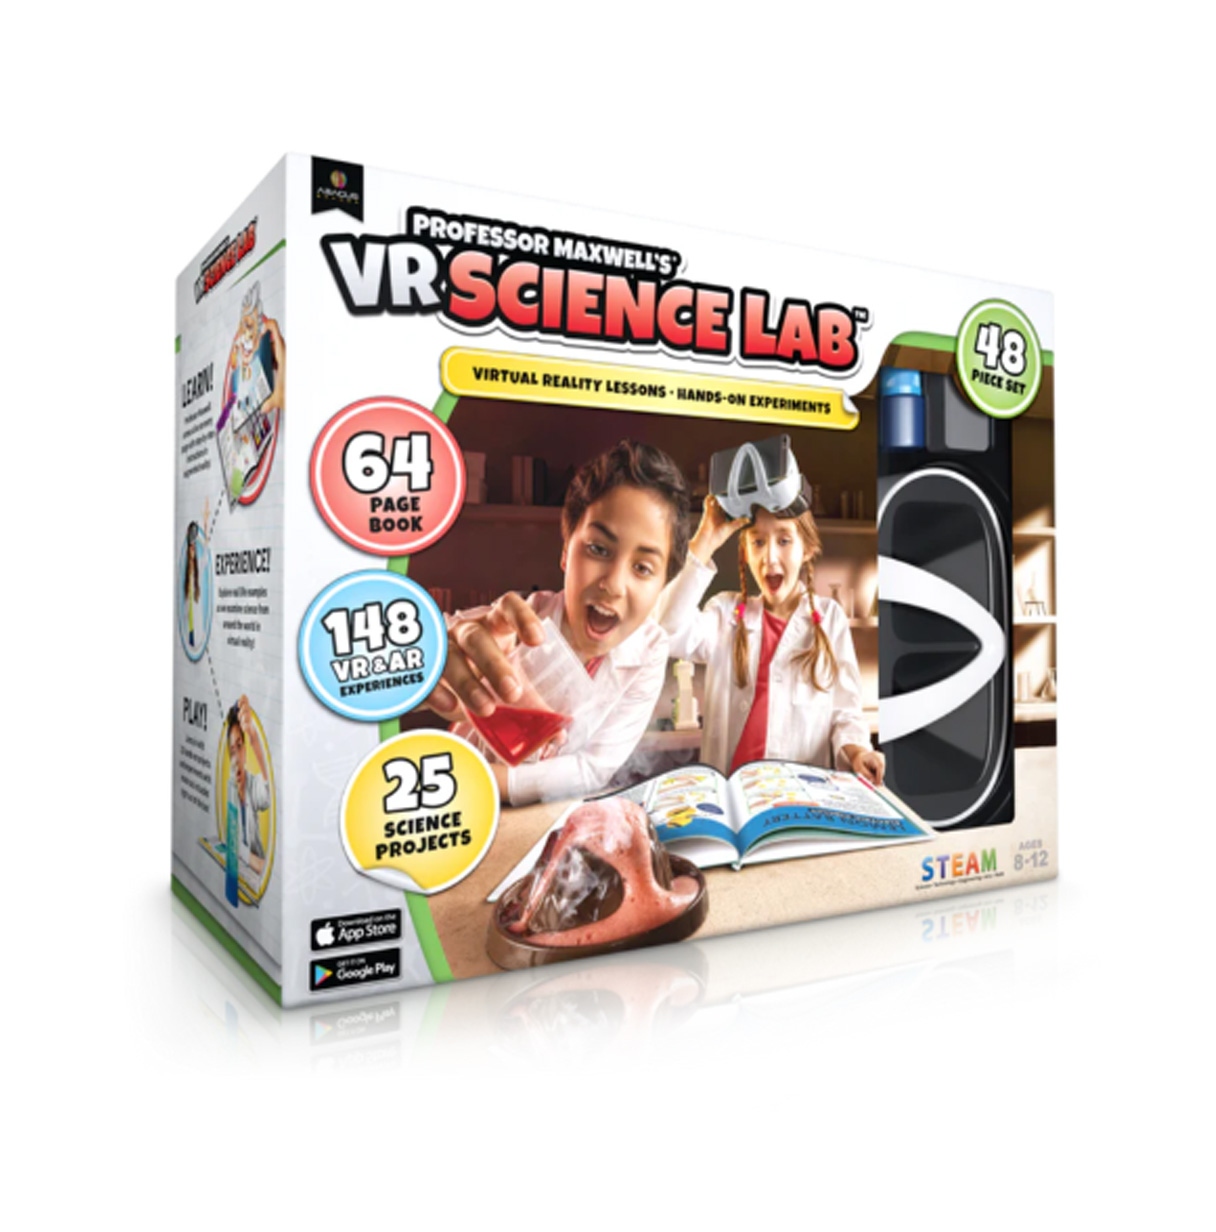 professor maxwell's vr science lab ( toy partner - 94888)